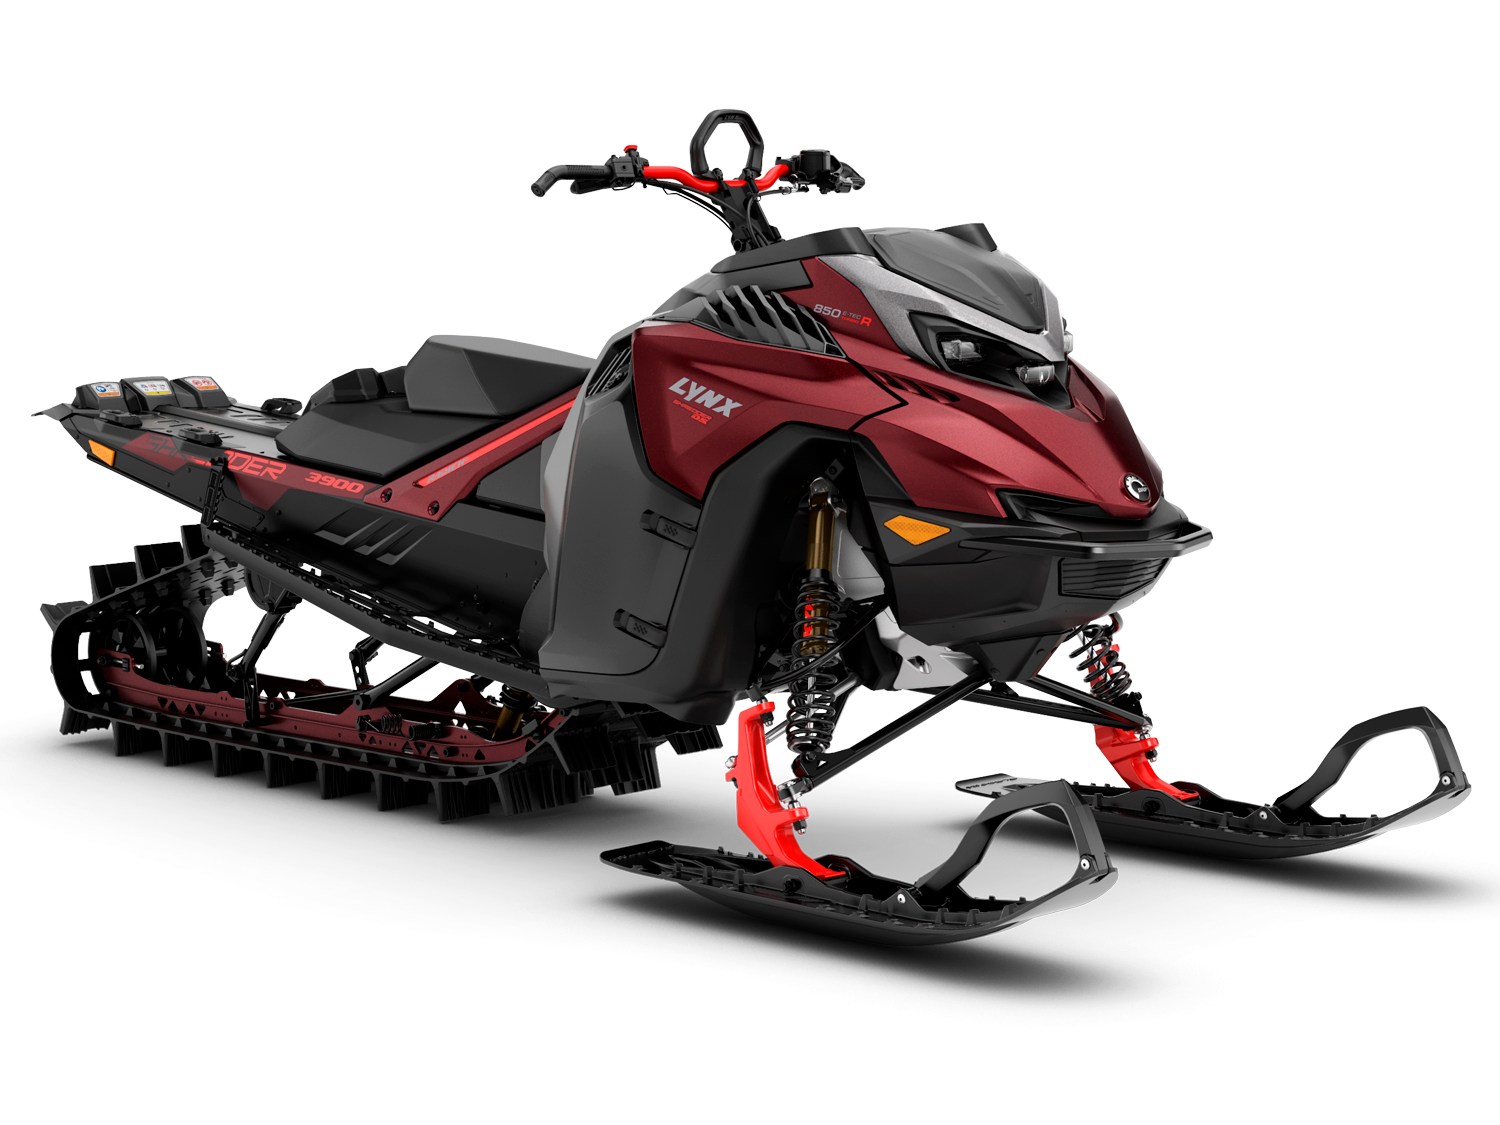  Lynx Shredder RE snowmobile